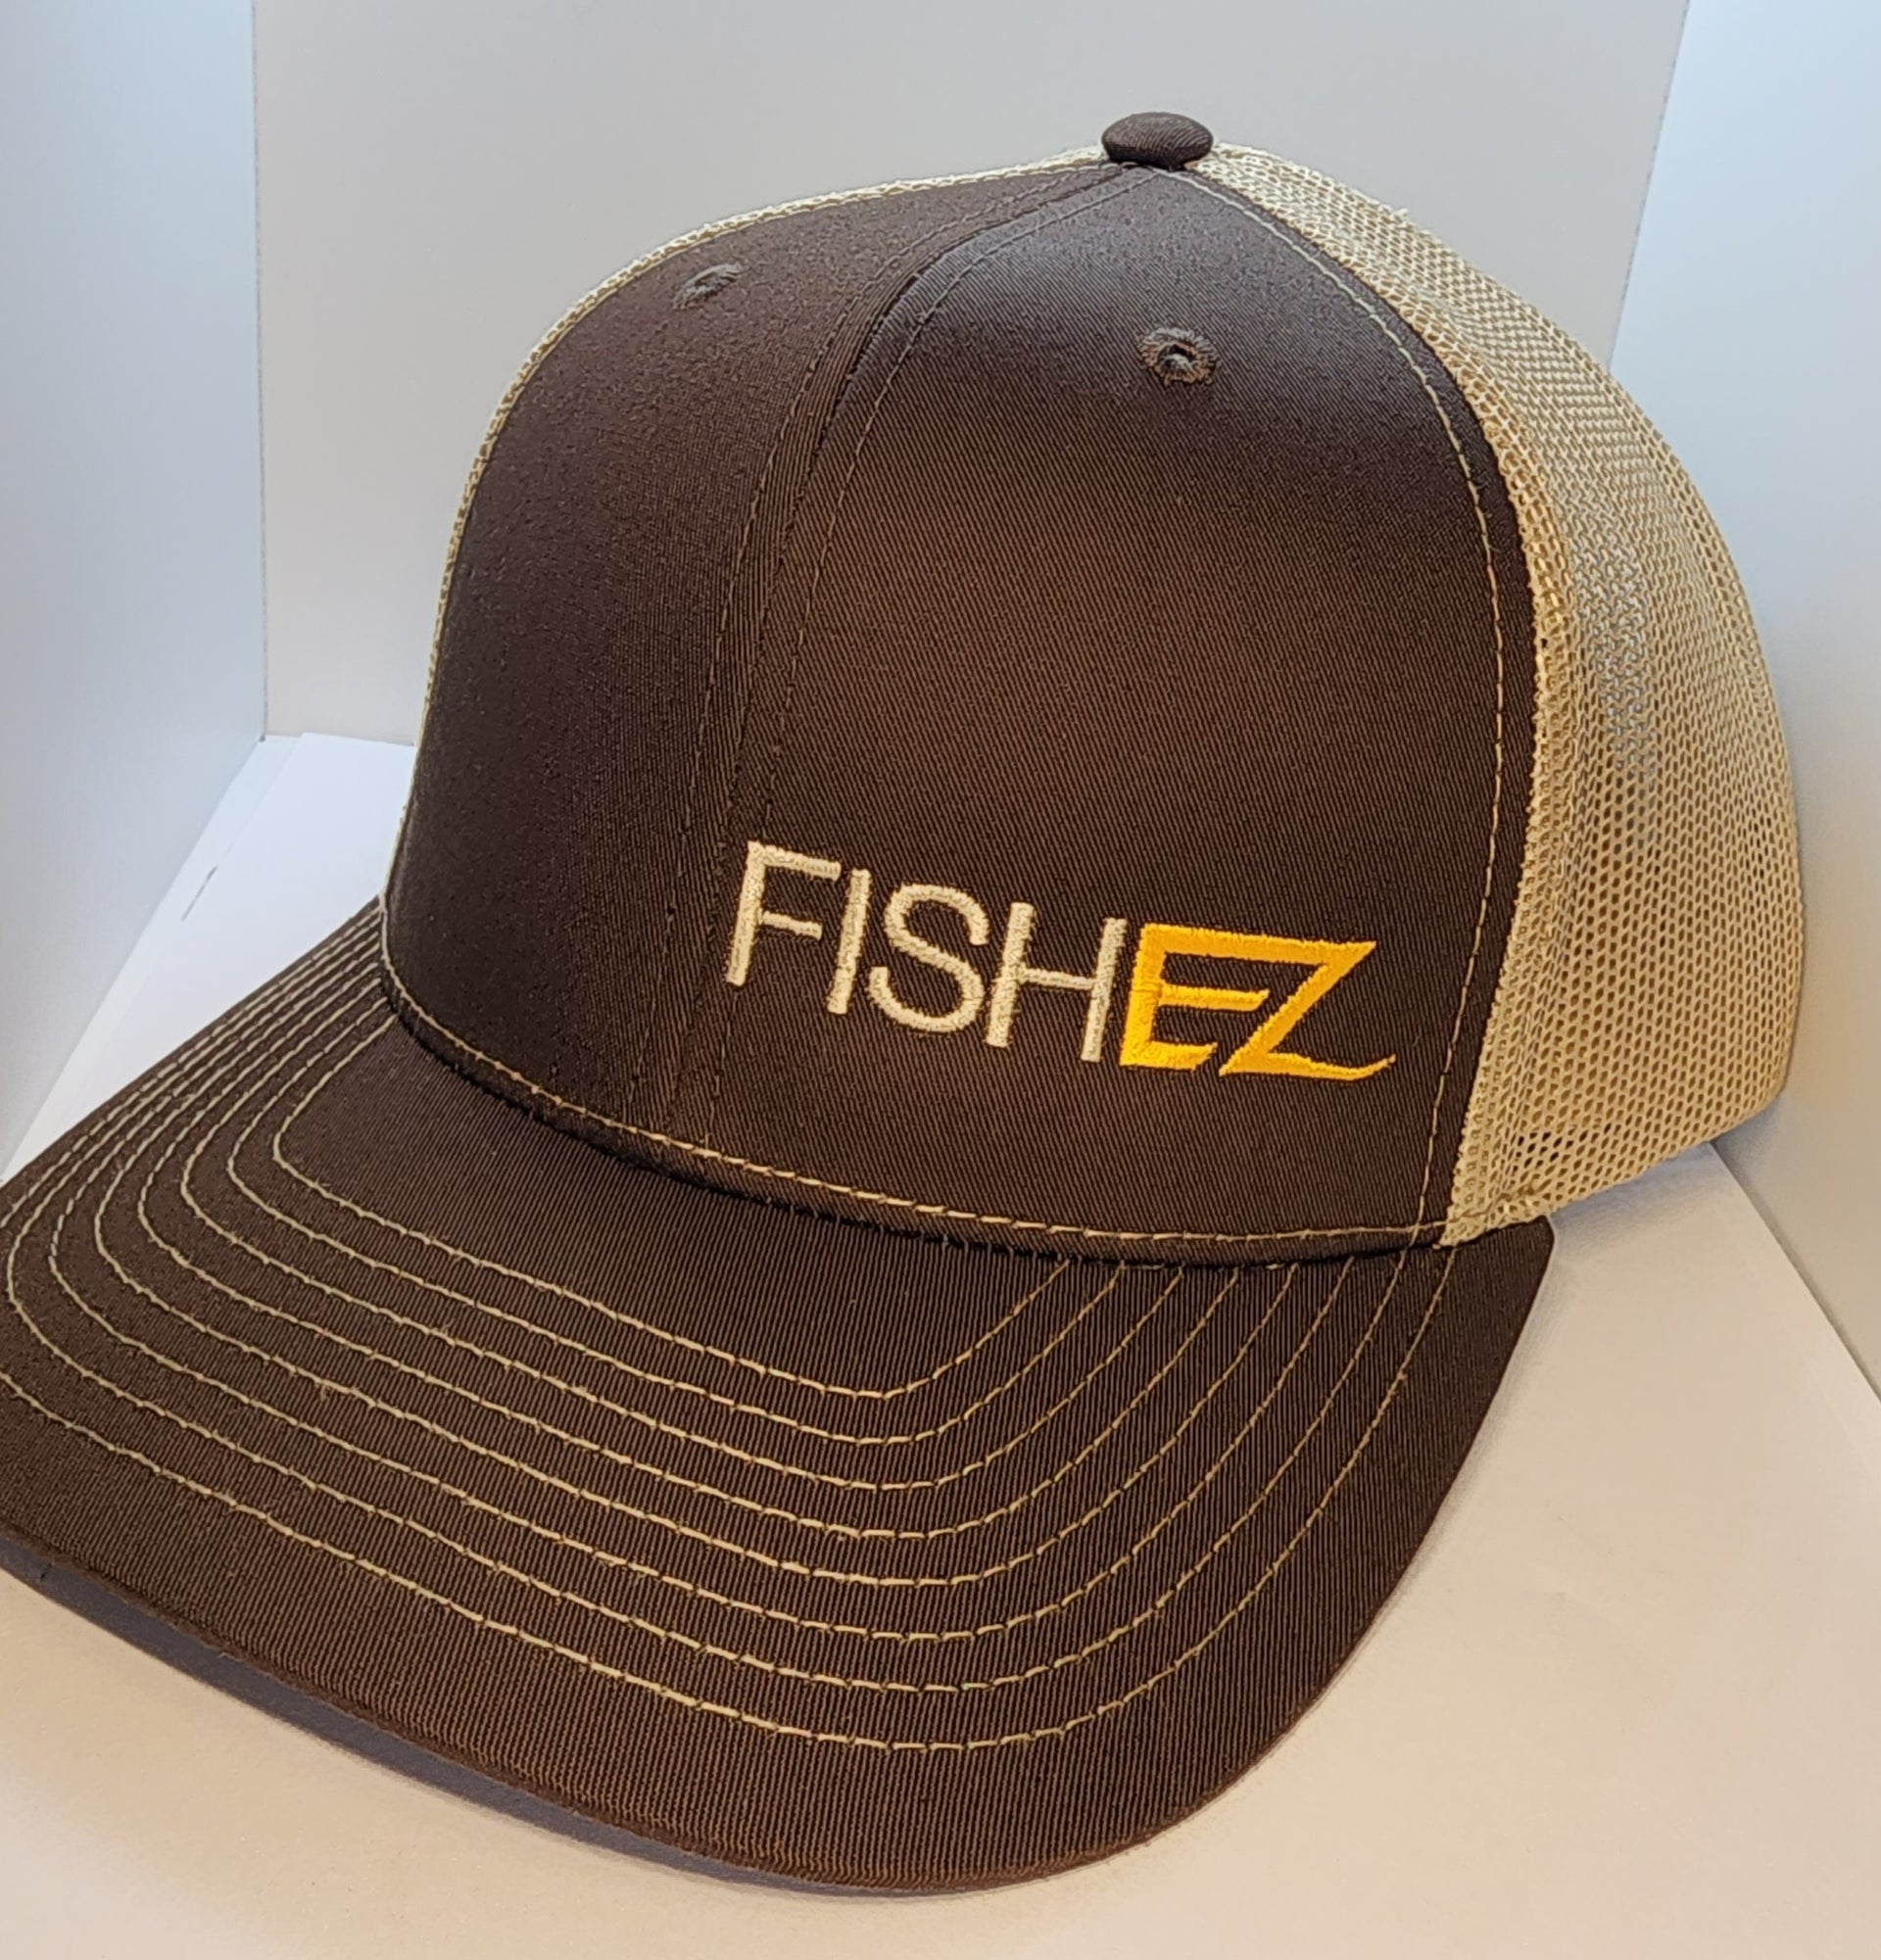 Buy A Man Eat Fish Hat / Trucker Cap Brown/ Khaki